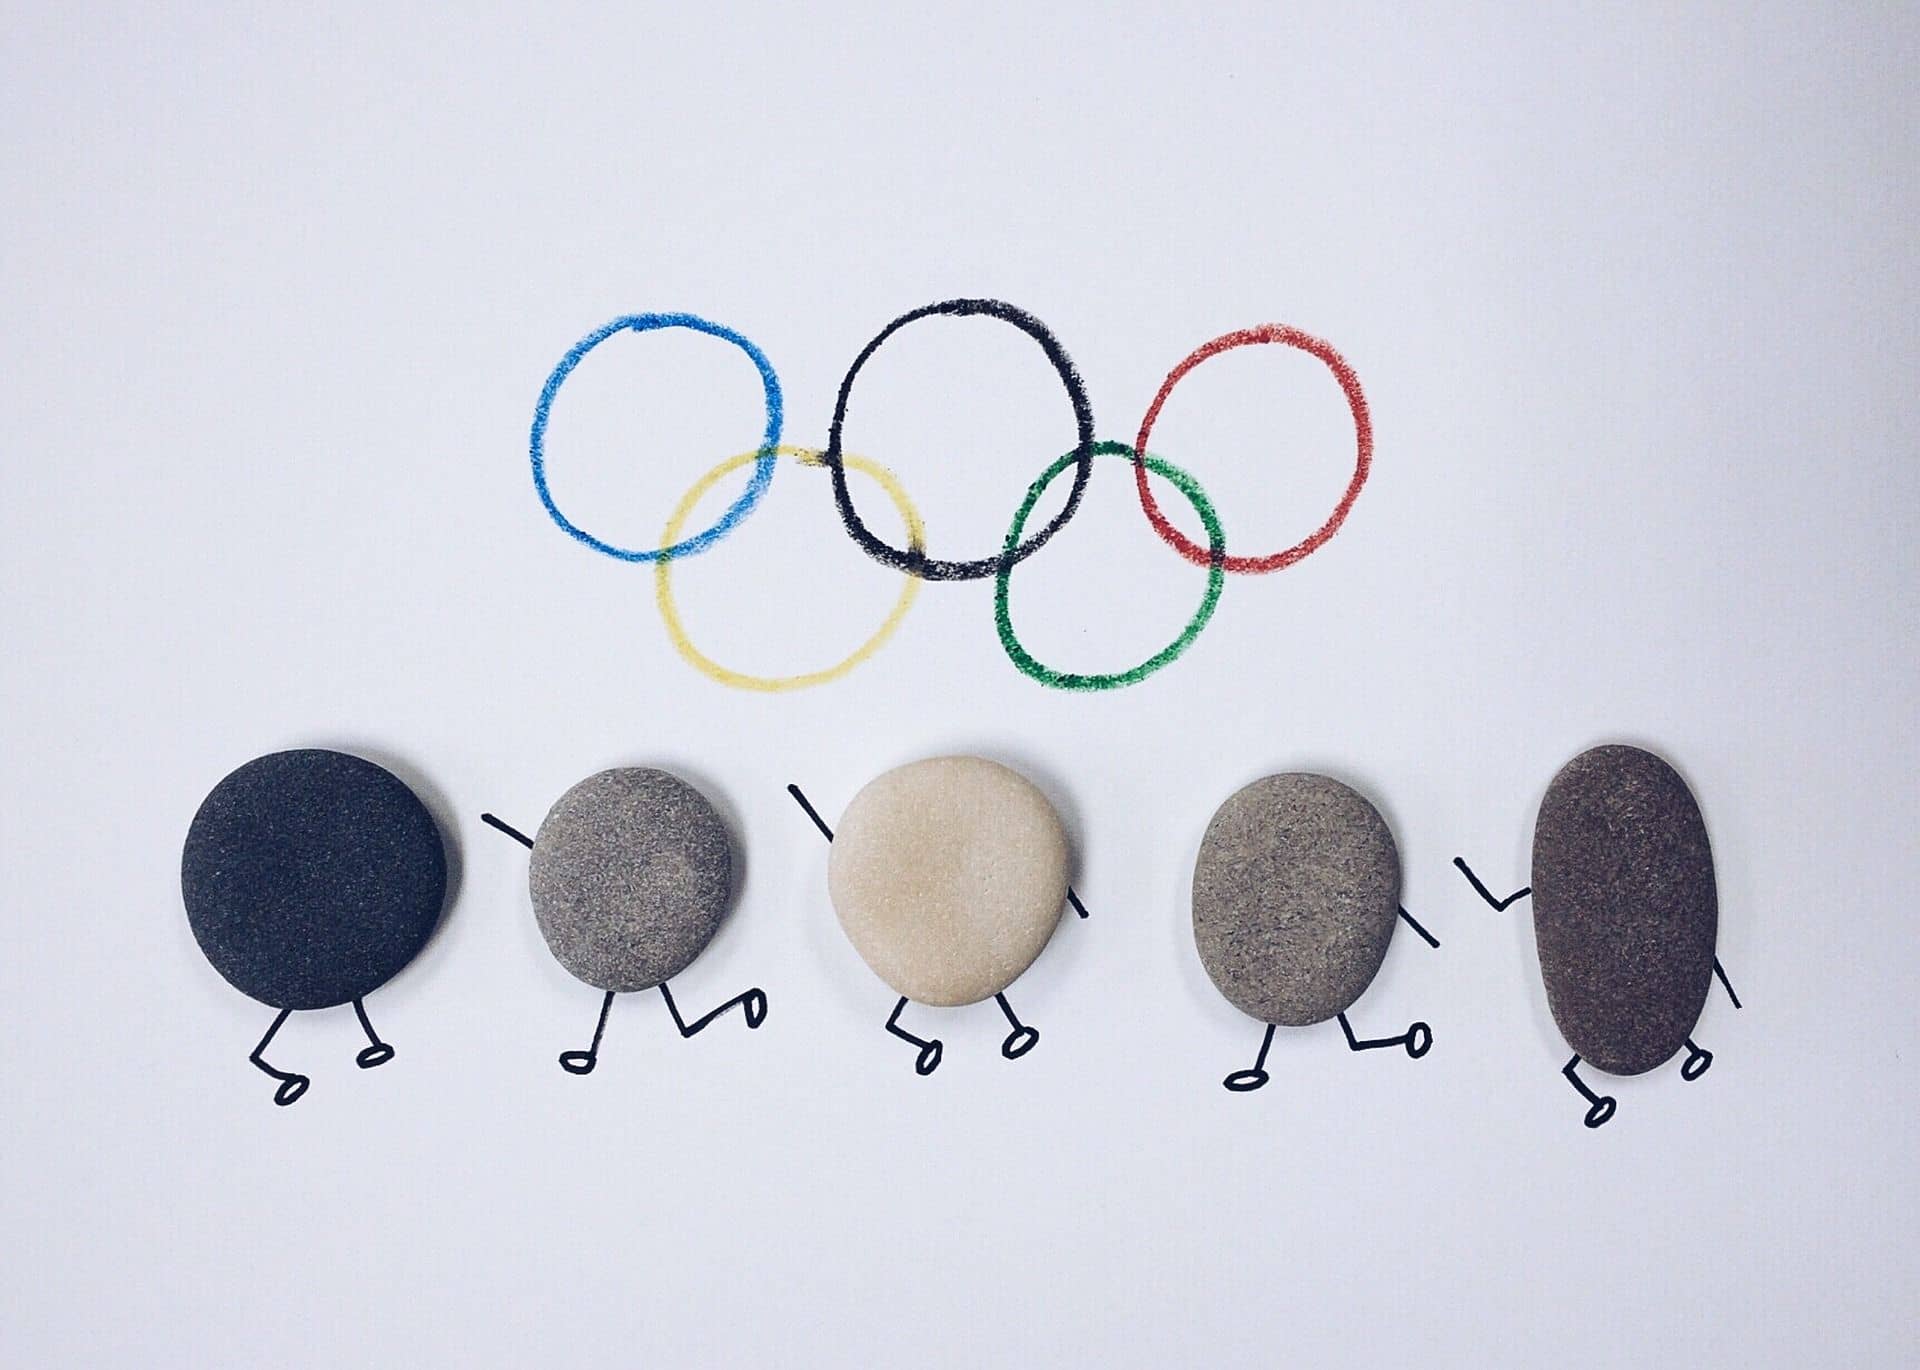 anillos olimpicos